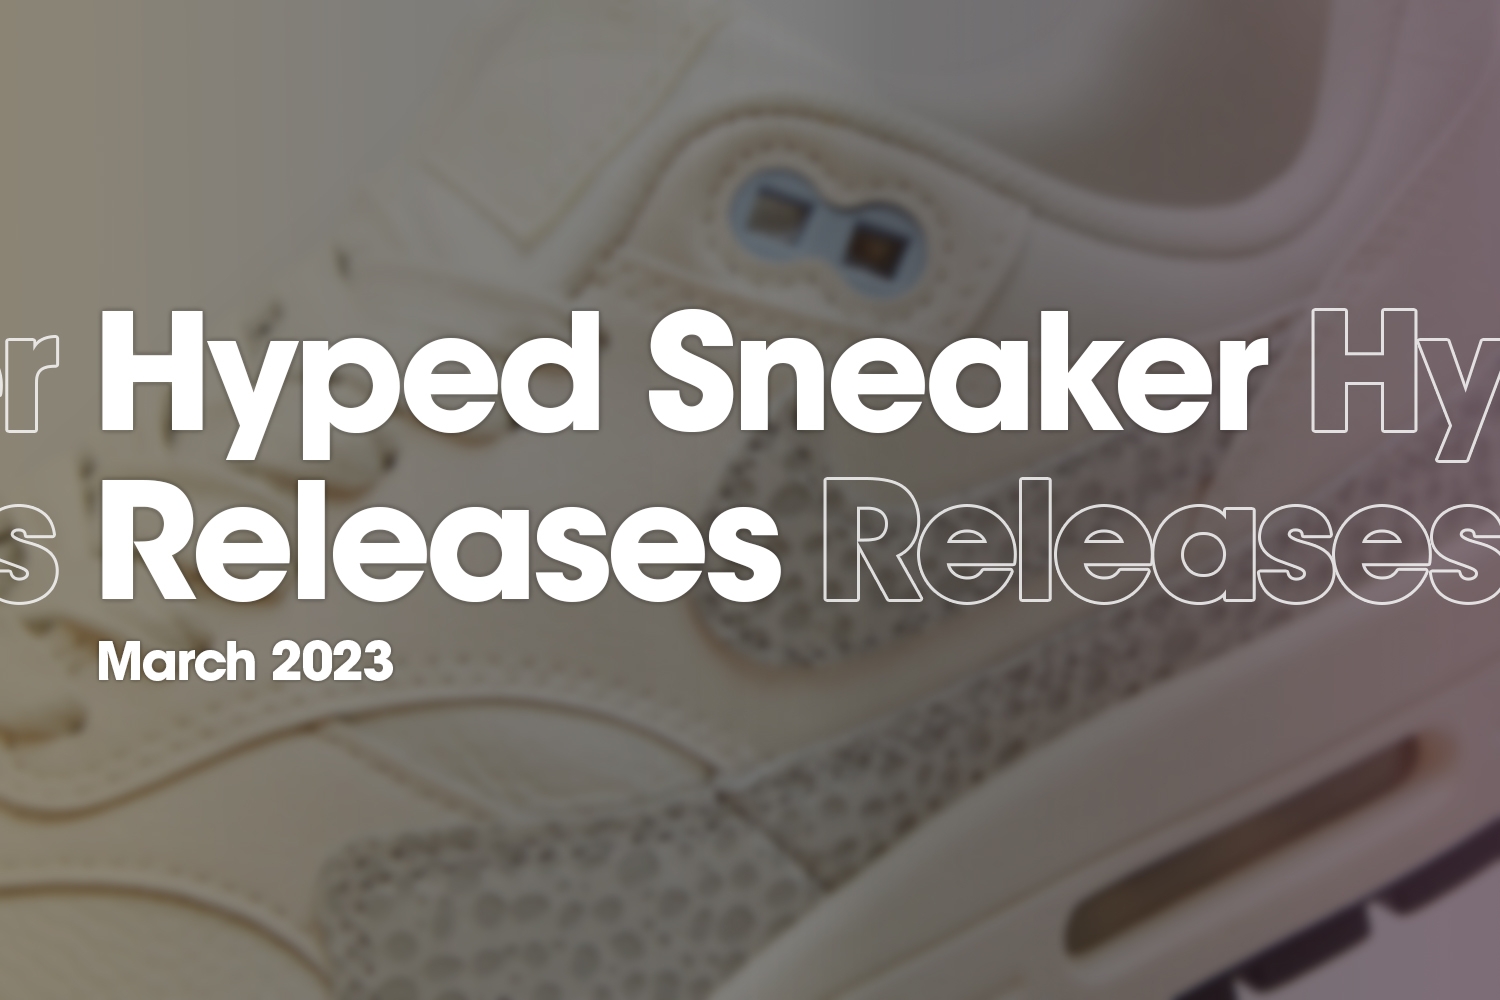 Hyped sneaker releases van maart 2023